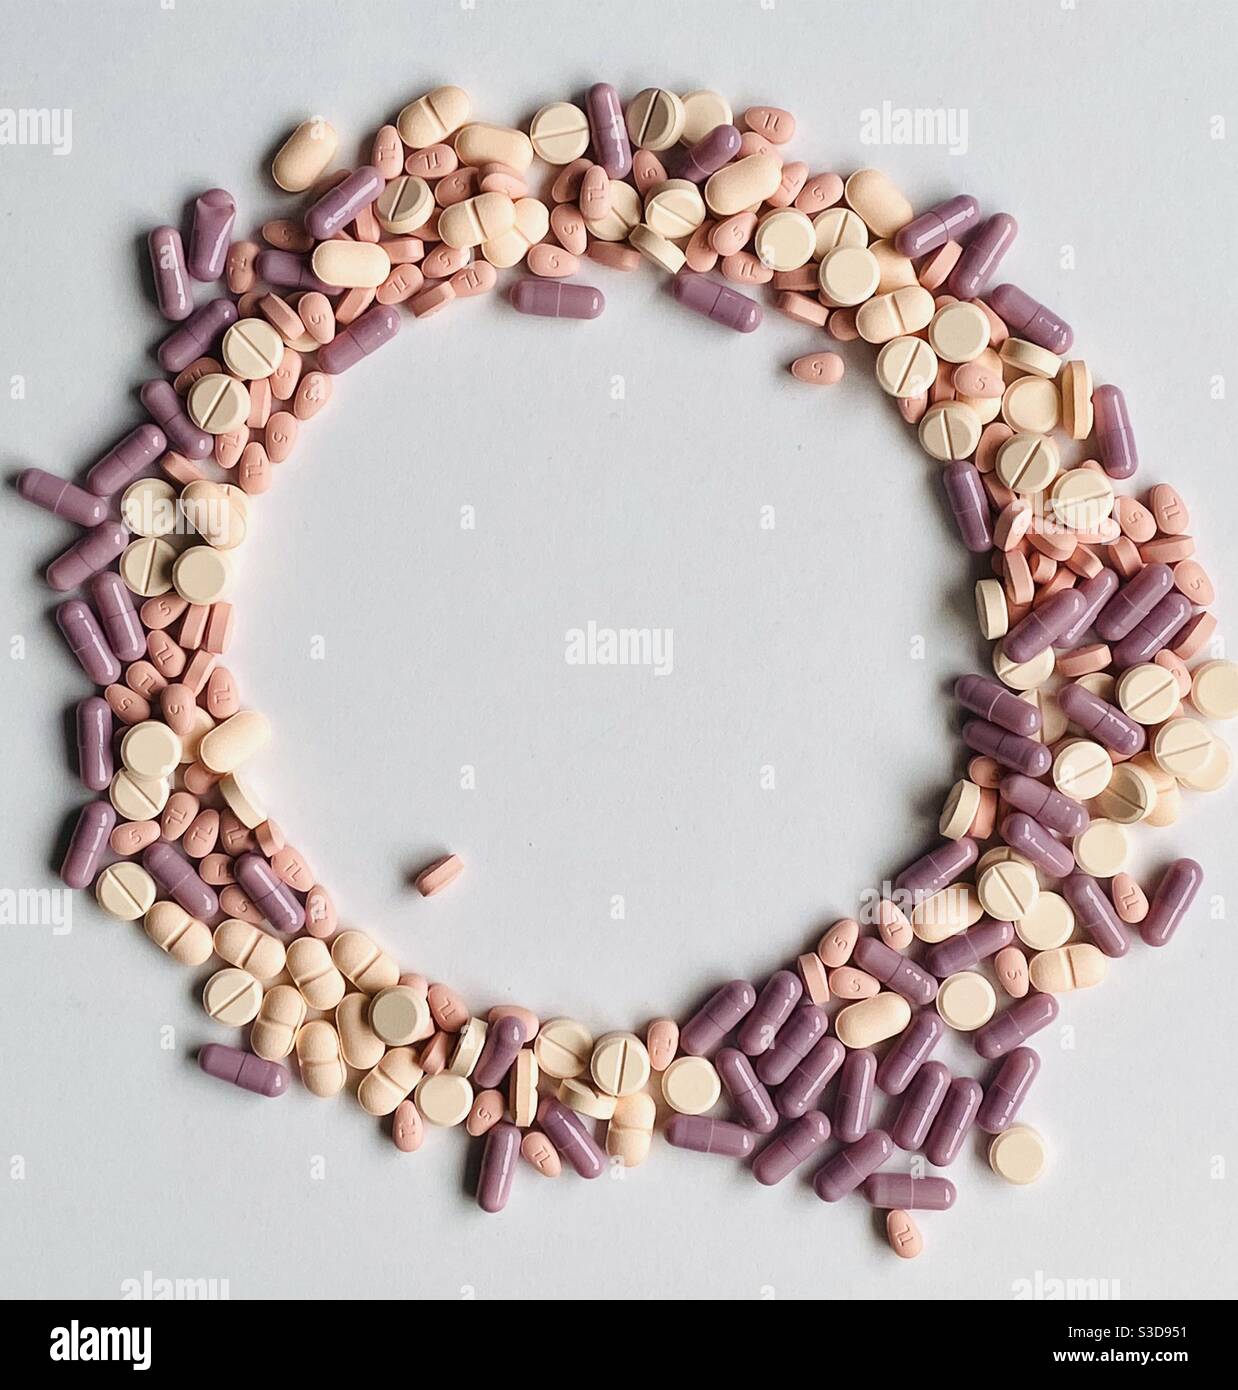 Circle of pills Stock Photo